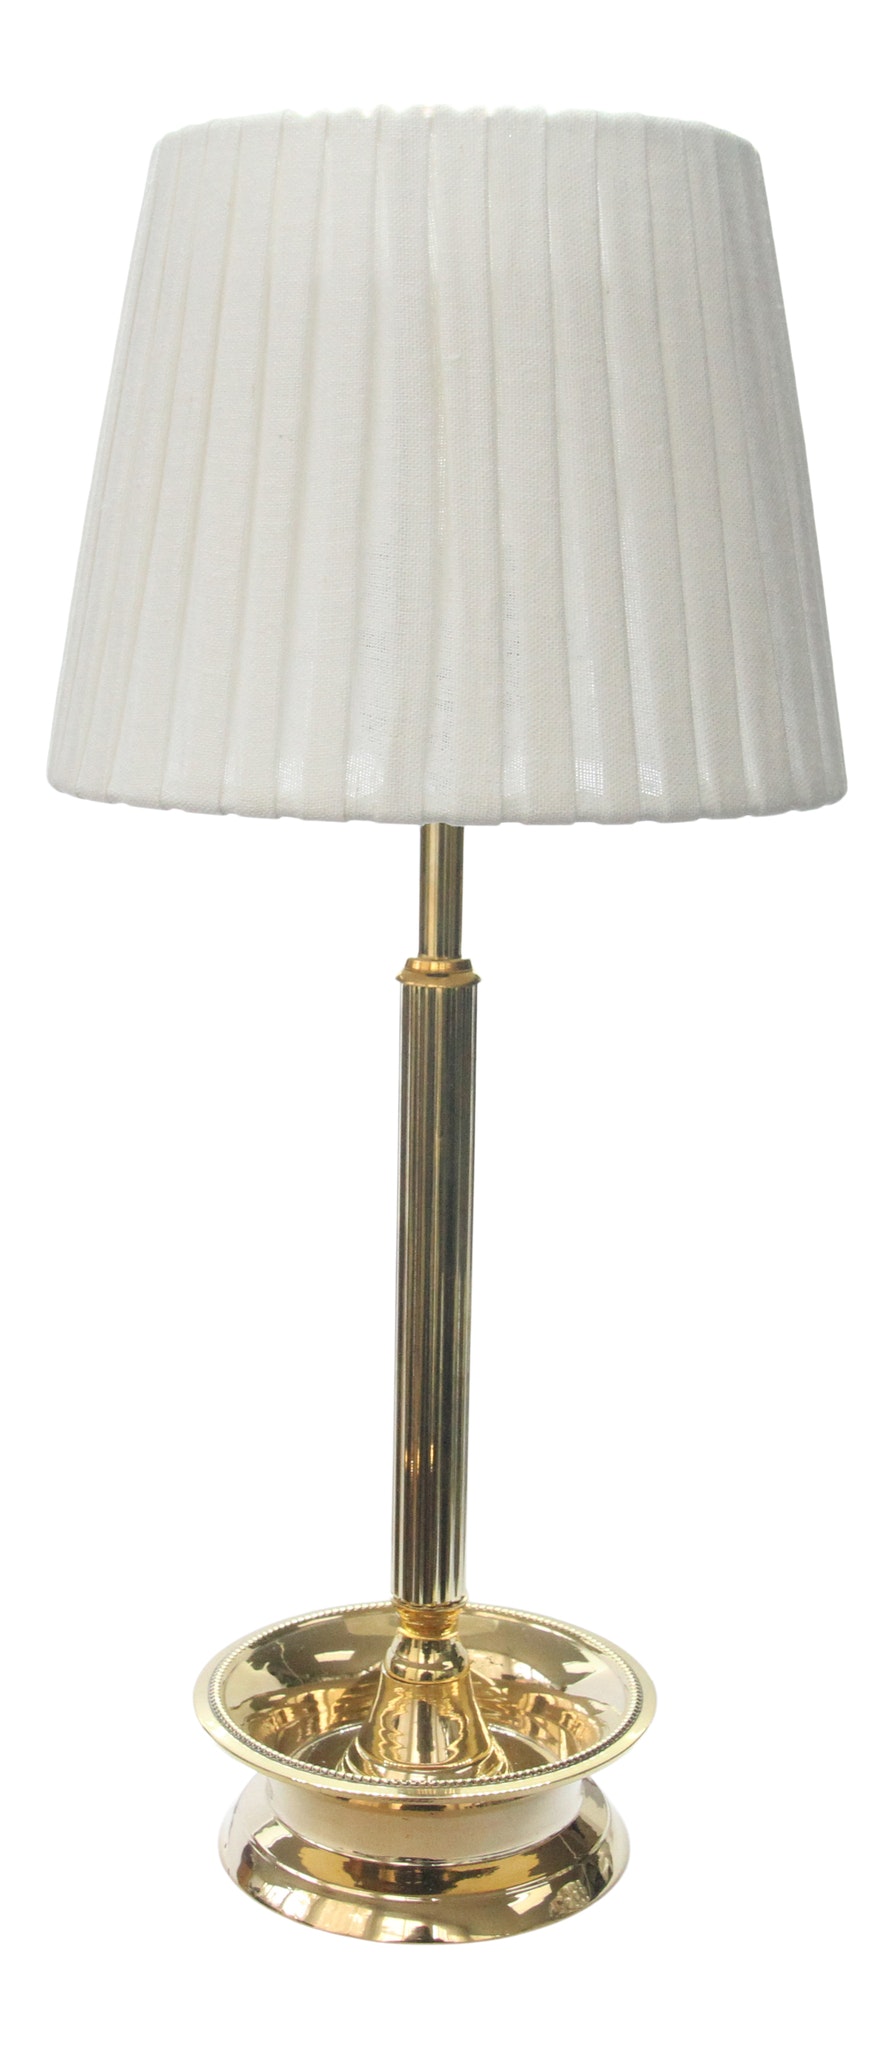 Brass lamp including screen